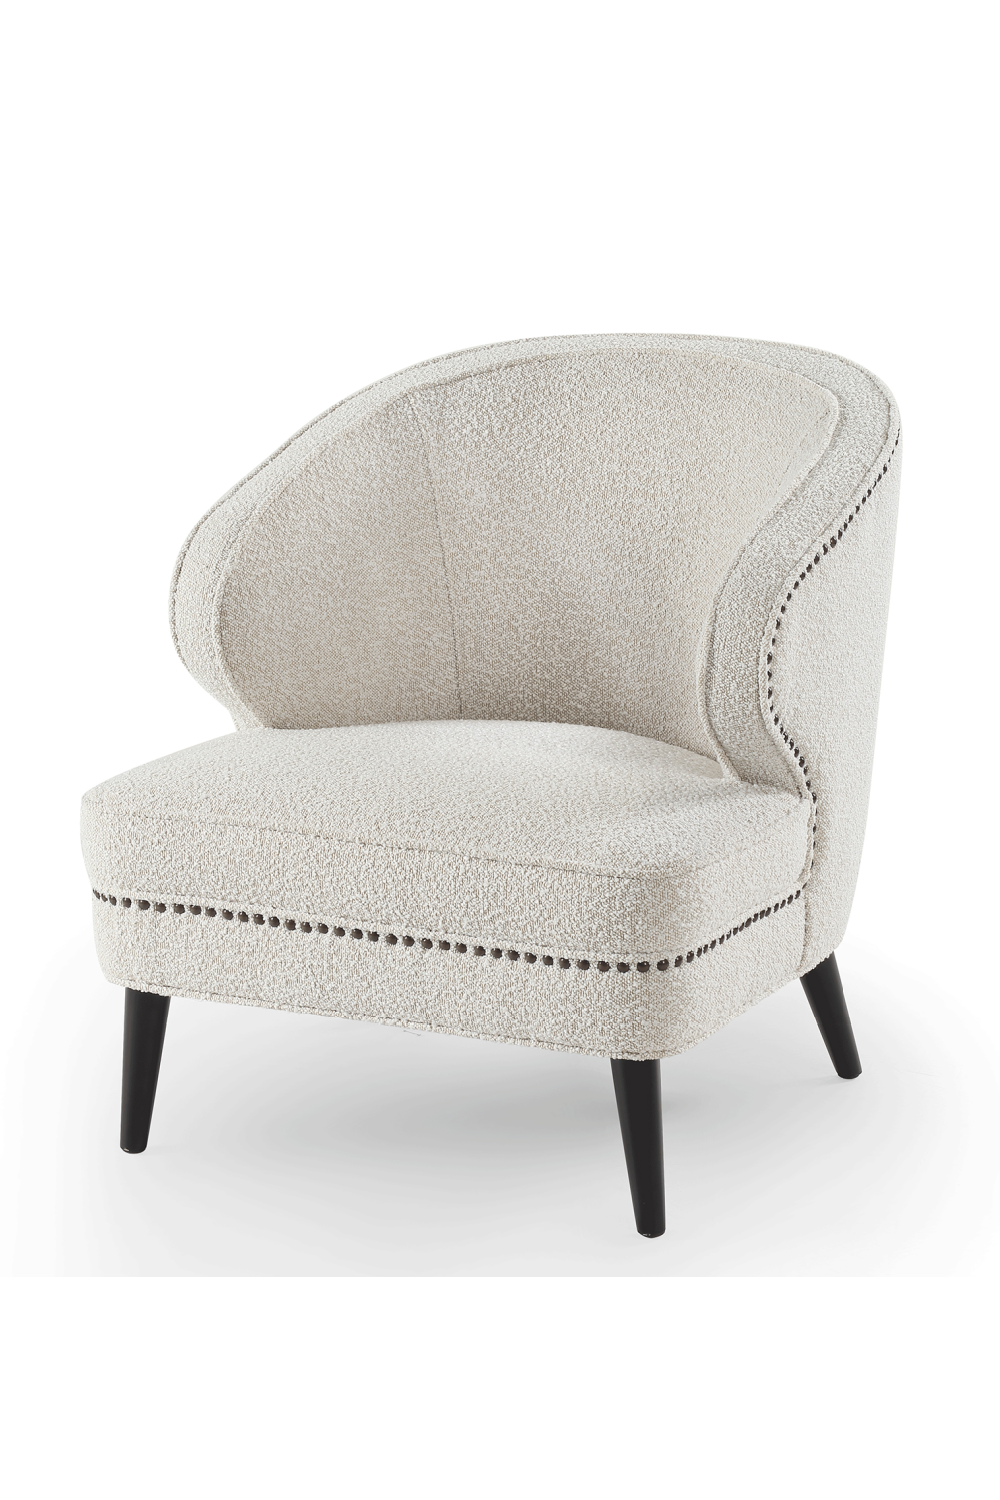 Upholstered Modern Occasional Chair | Liang & Eimil Lindsay | Oroa.com